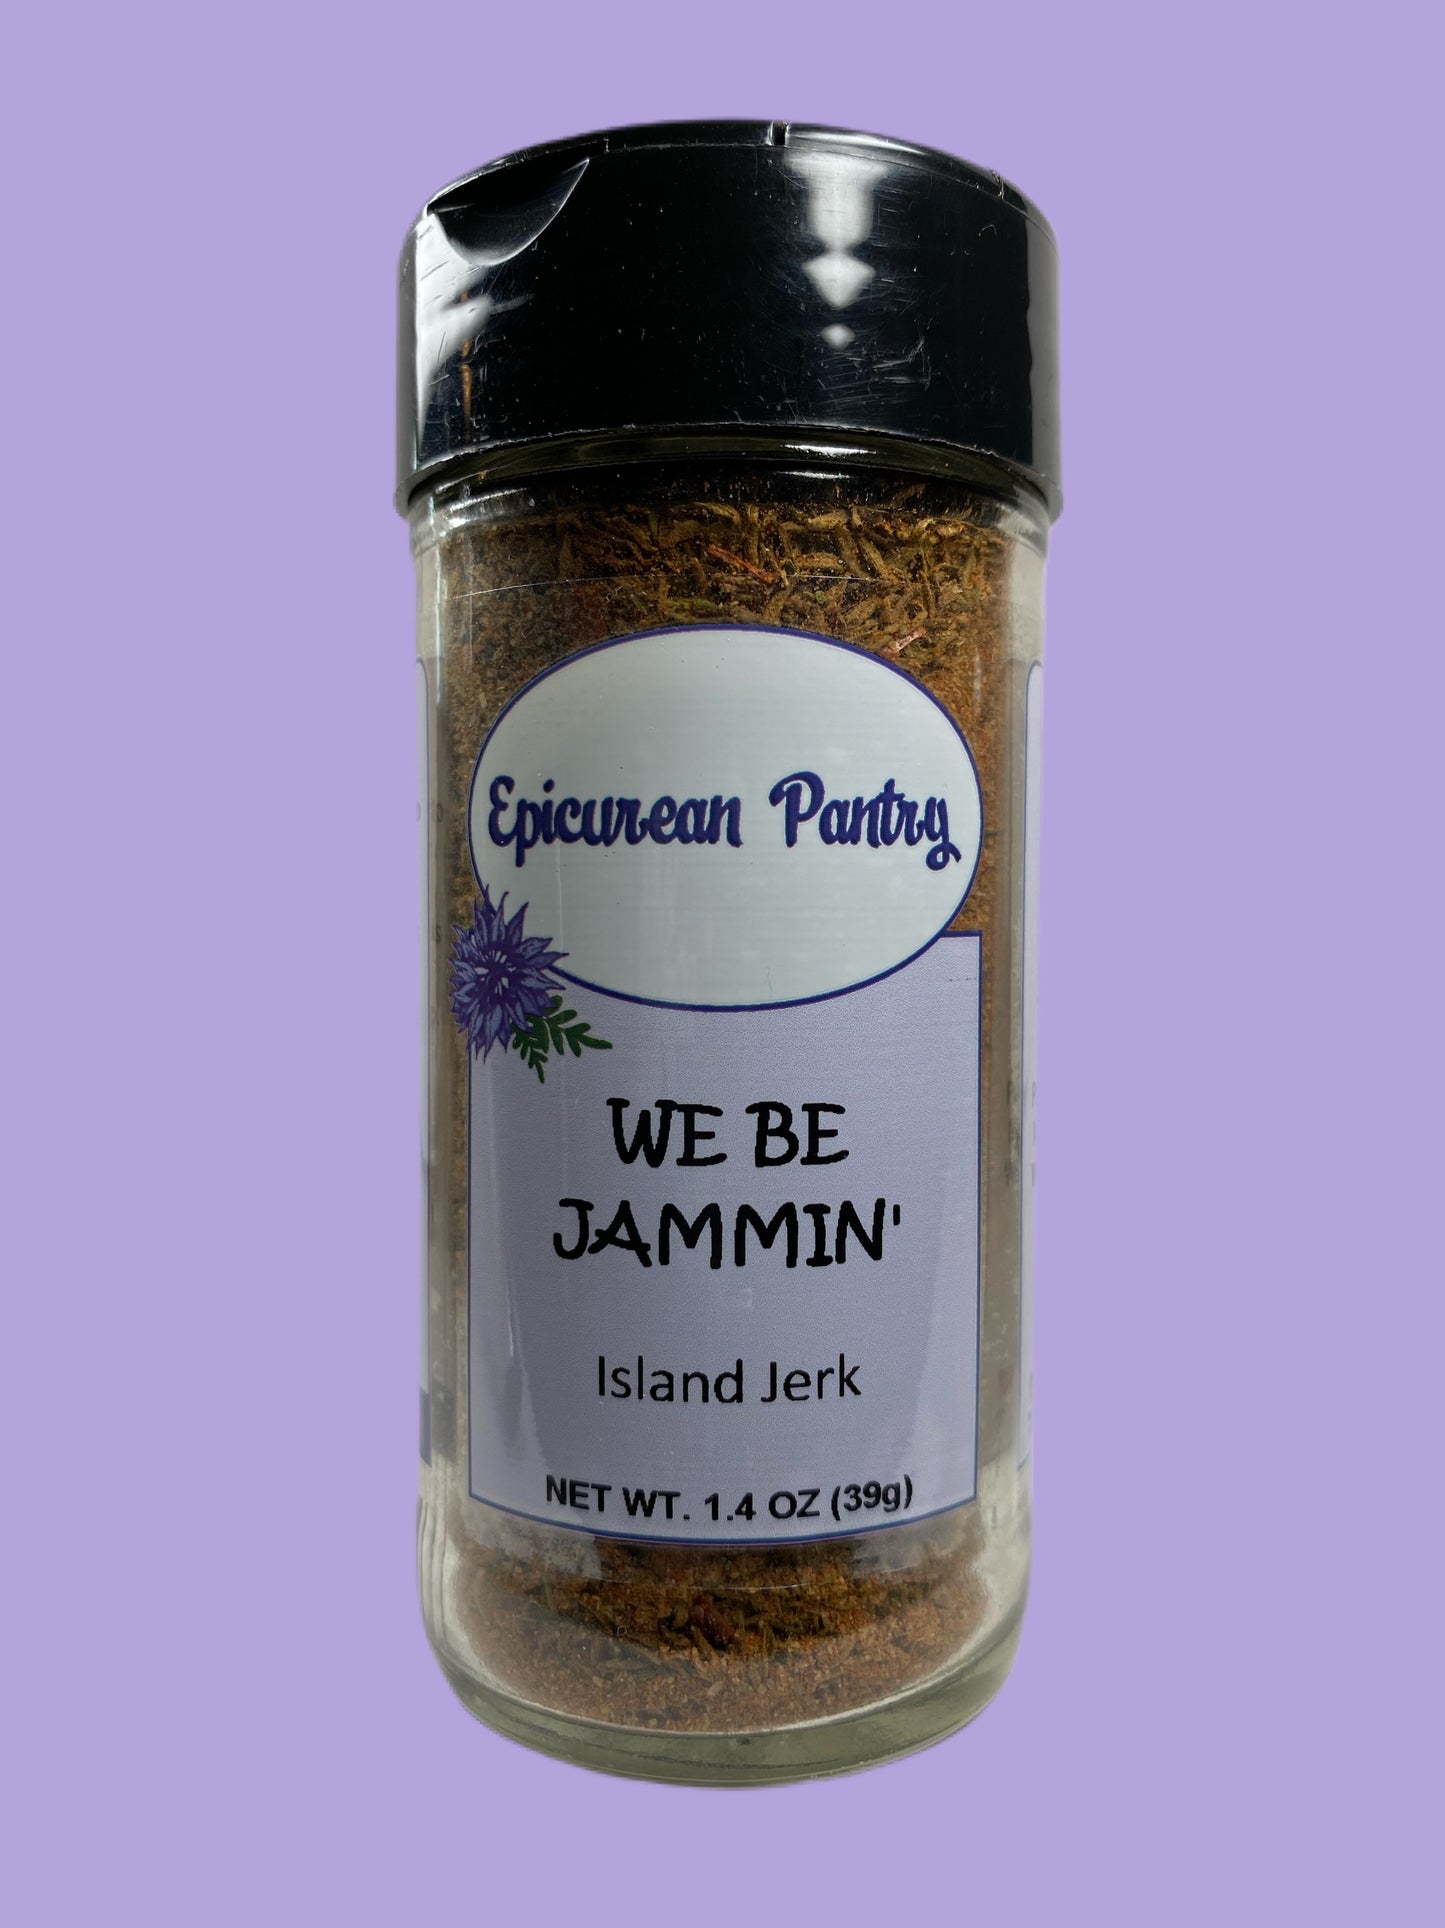 We Be Jammin' - Island Jerk Seasoning - 1.4 oz net wt